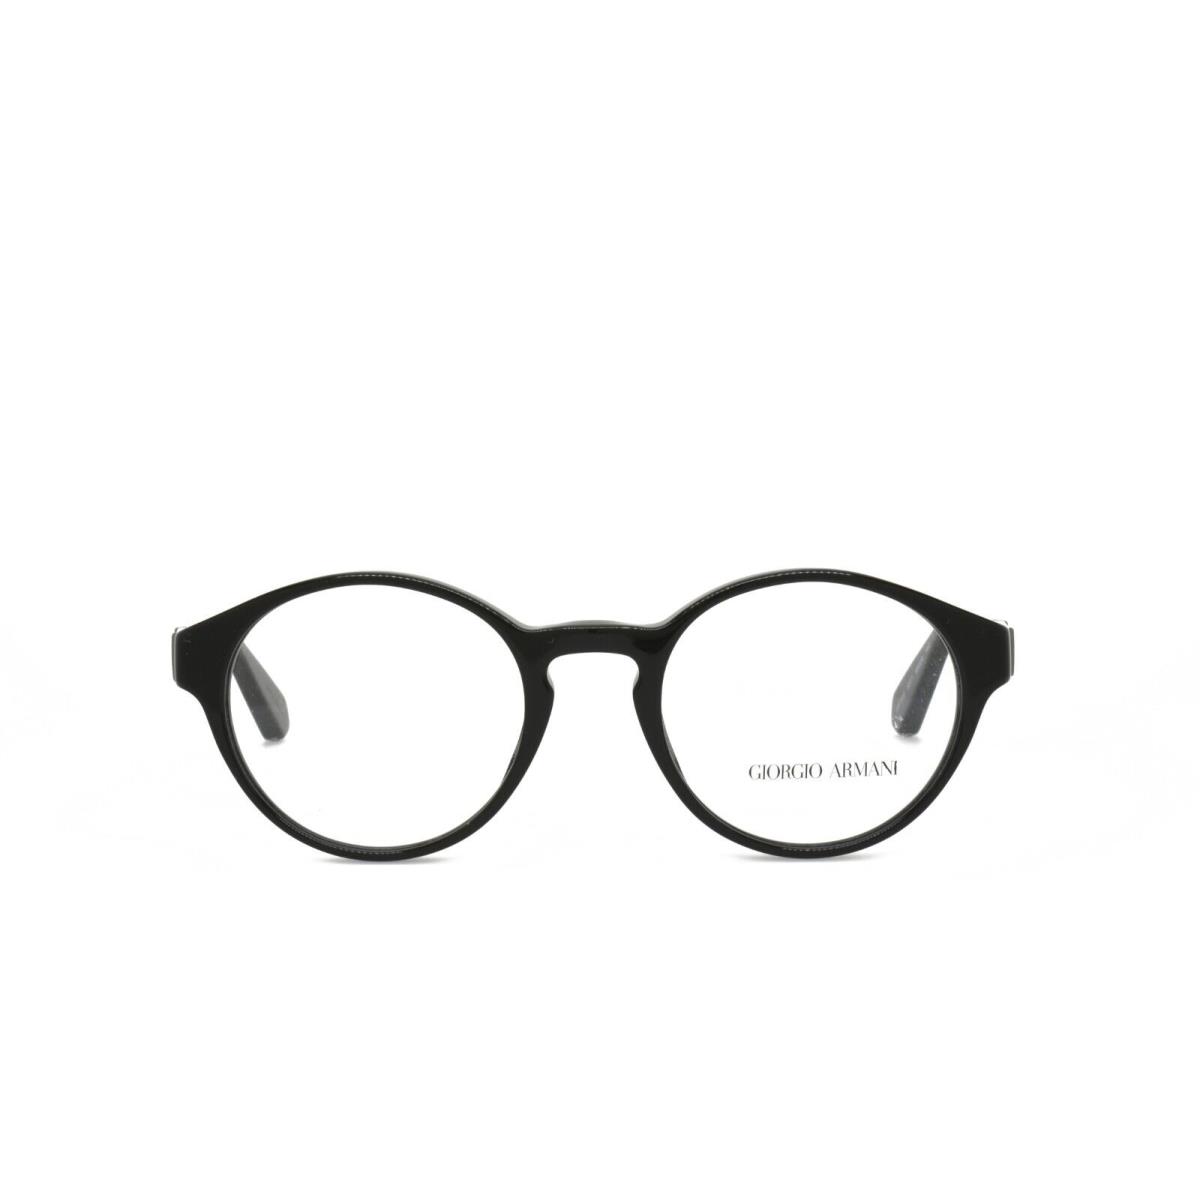 Giorgio Armani eyeglasses  - Black Frame